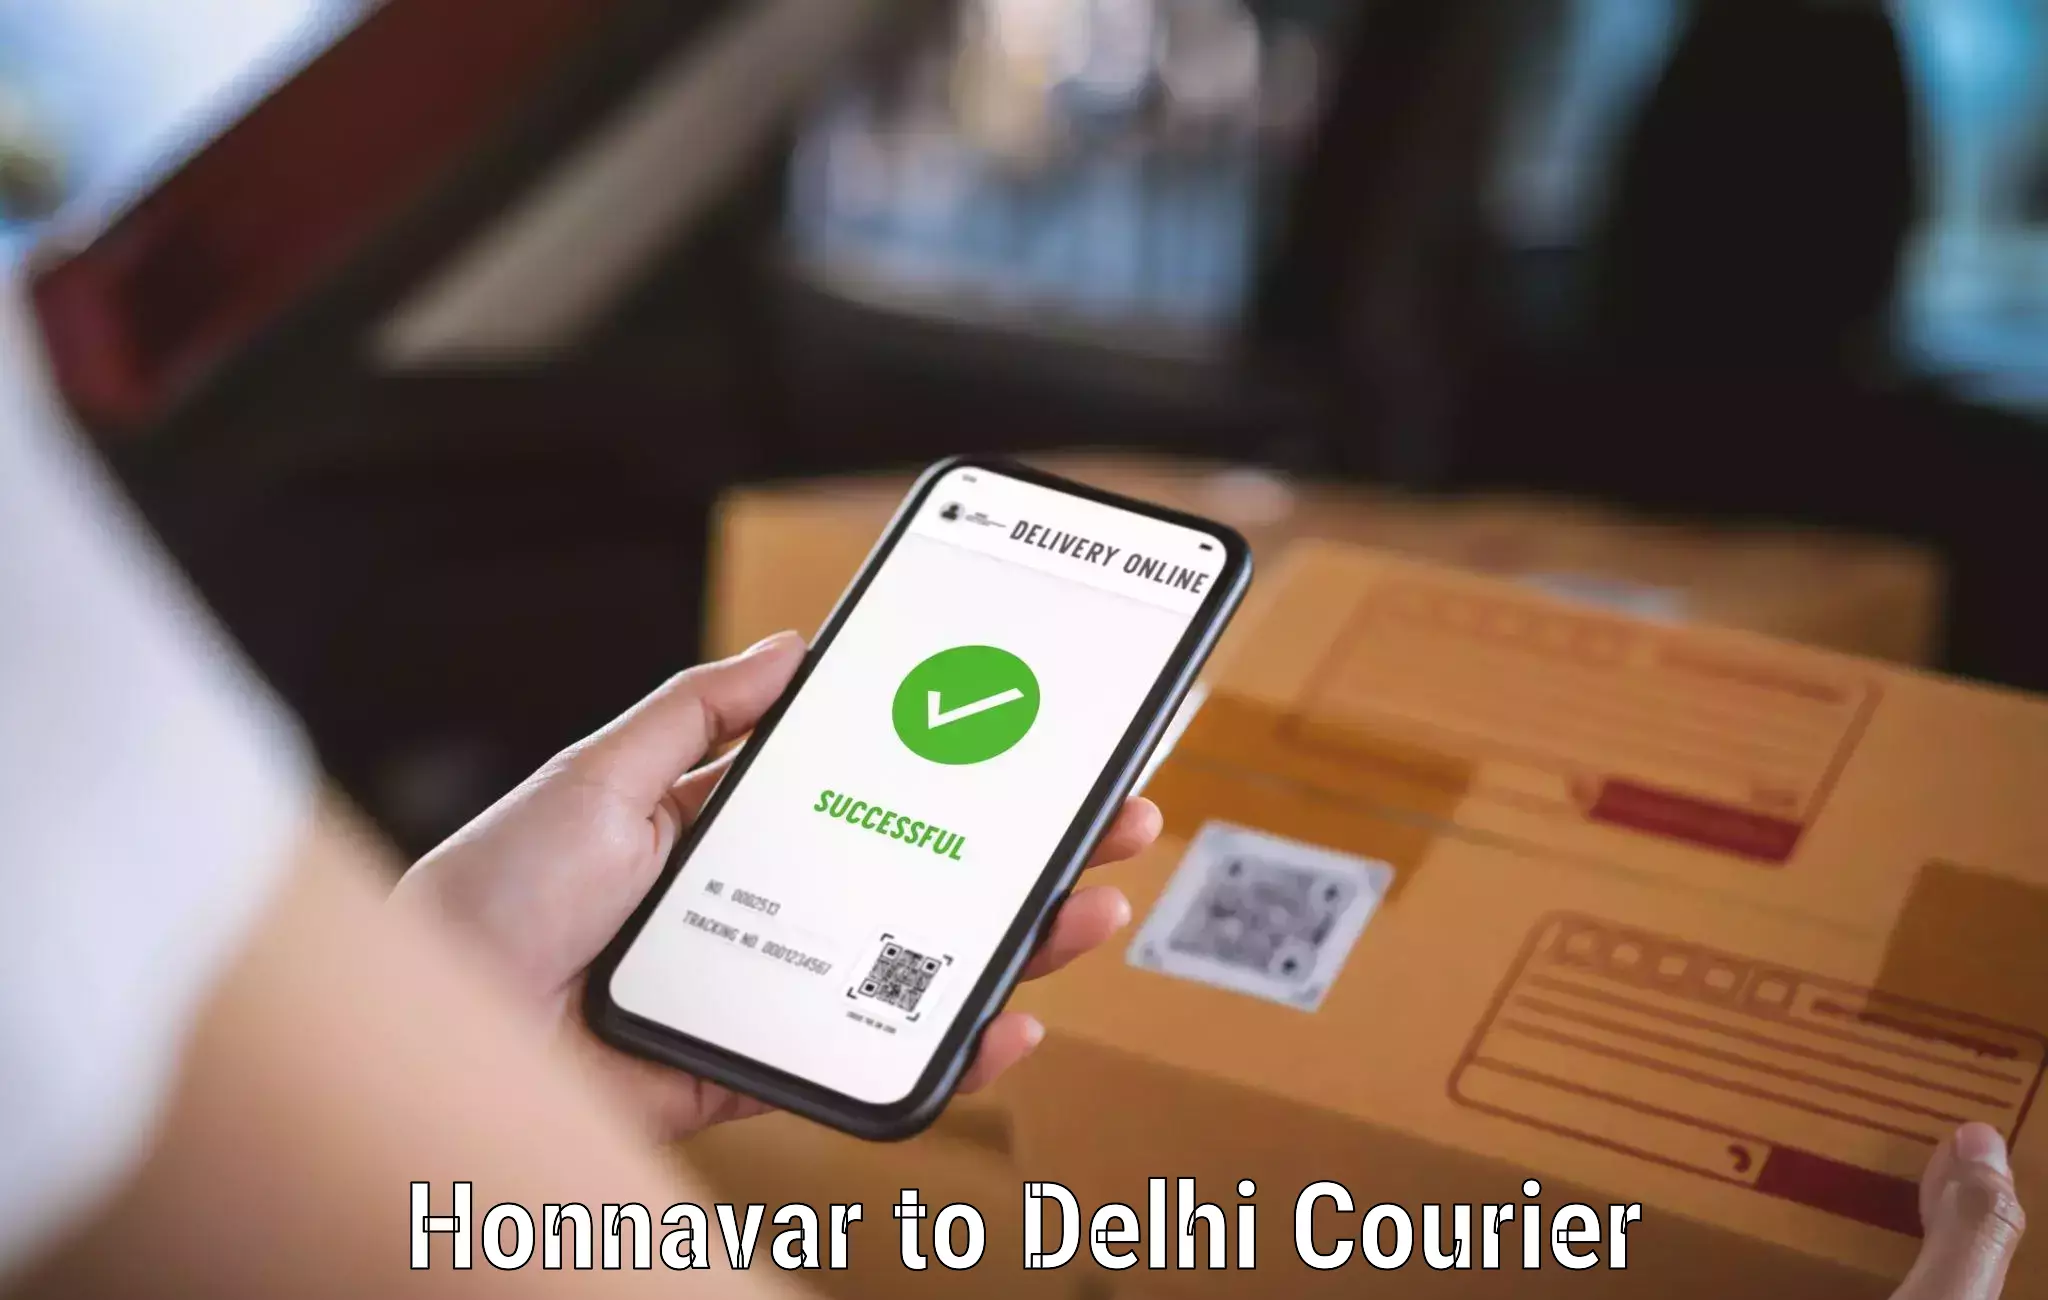 Express delivery network Honnavar to Delhi